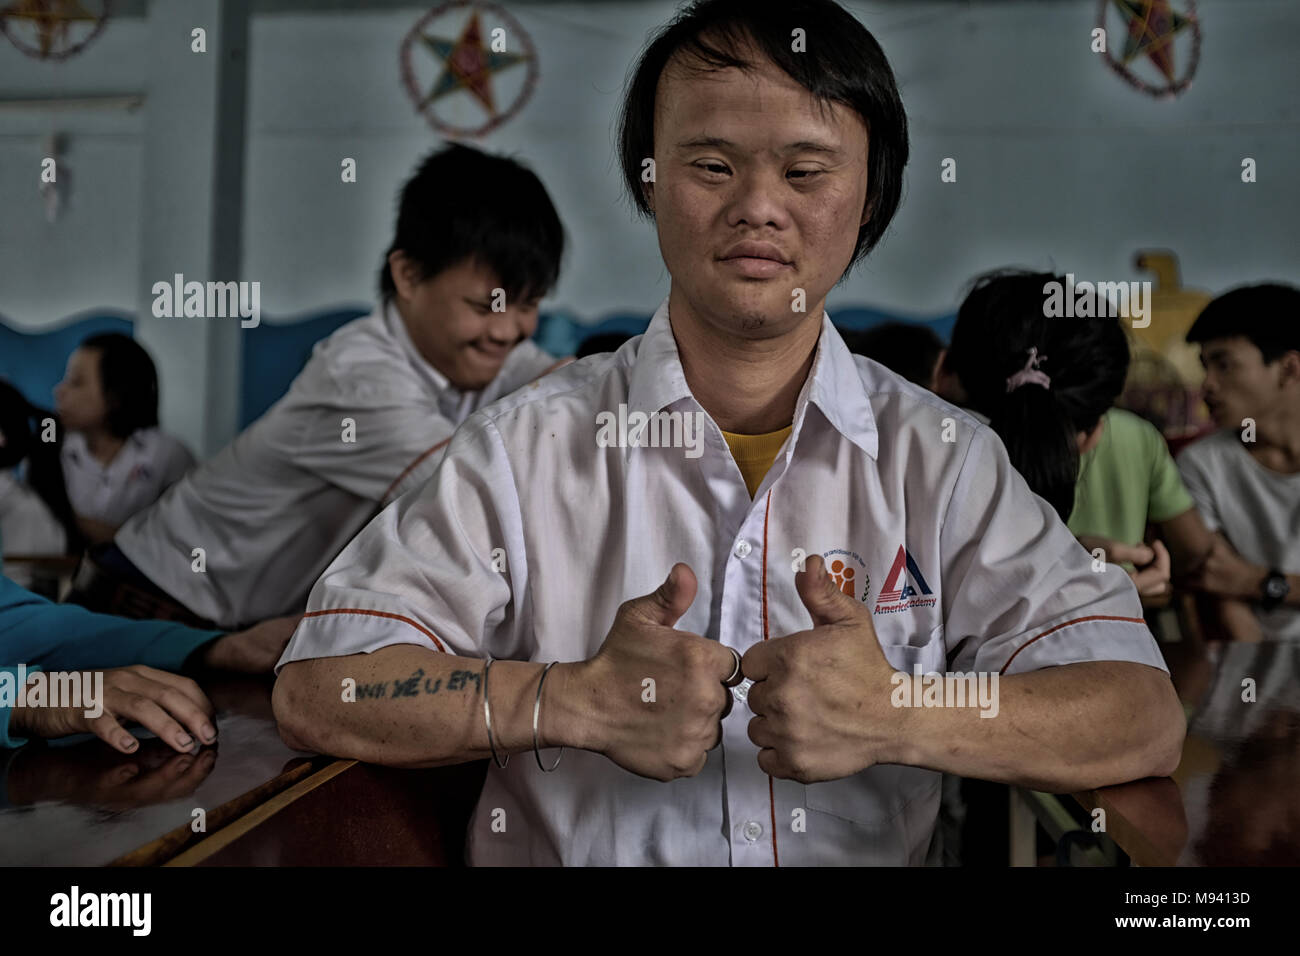 Agent Orange Opfer In Vietnam Stockfotografie Alamy